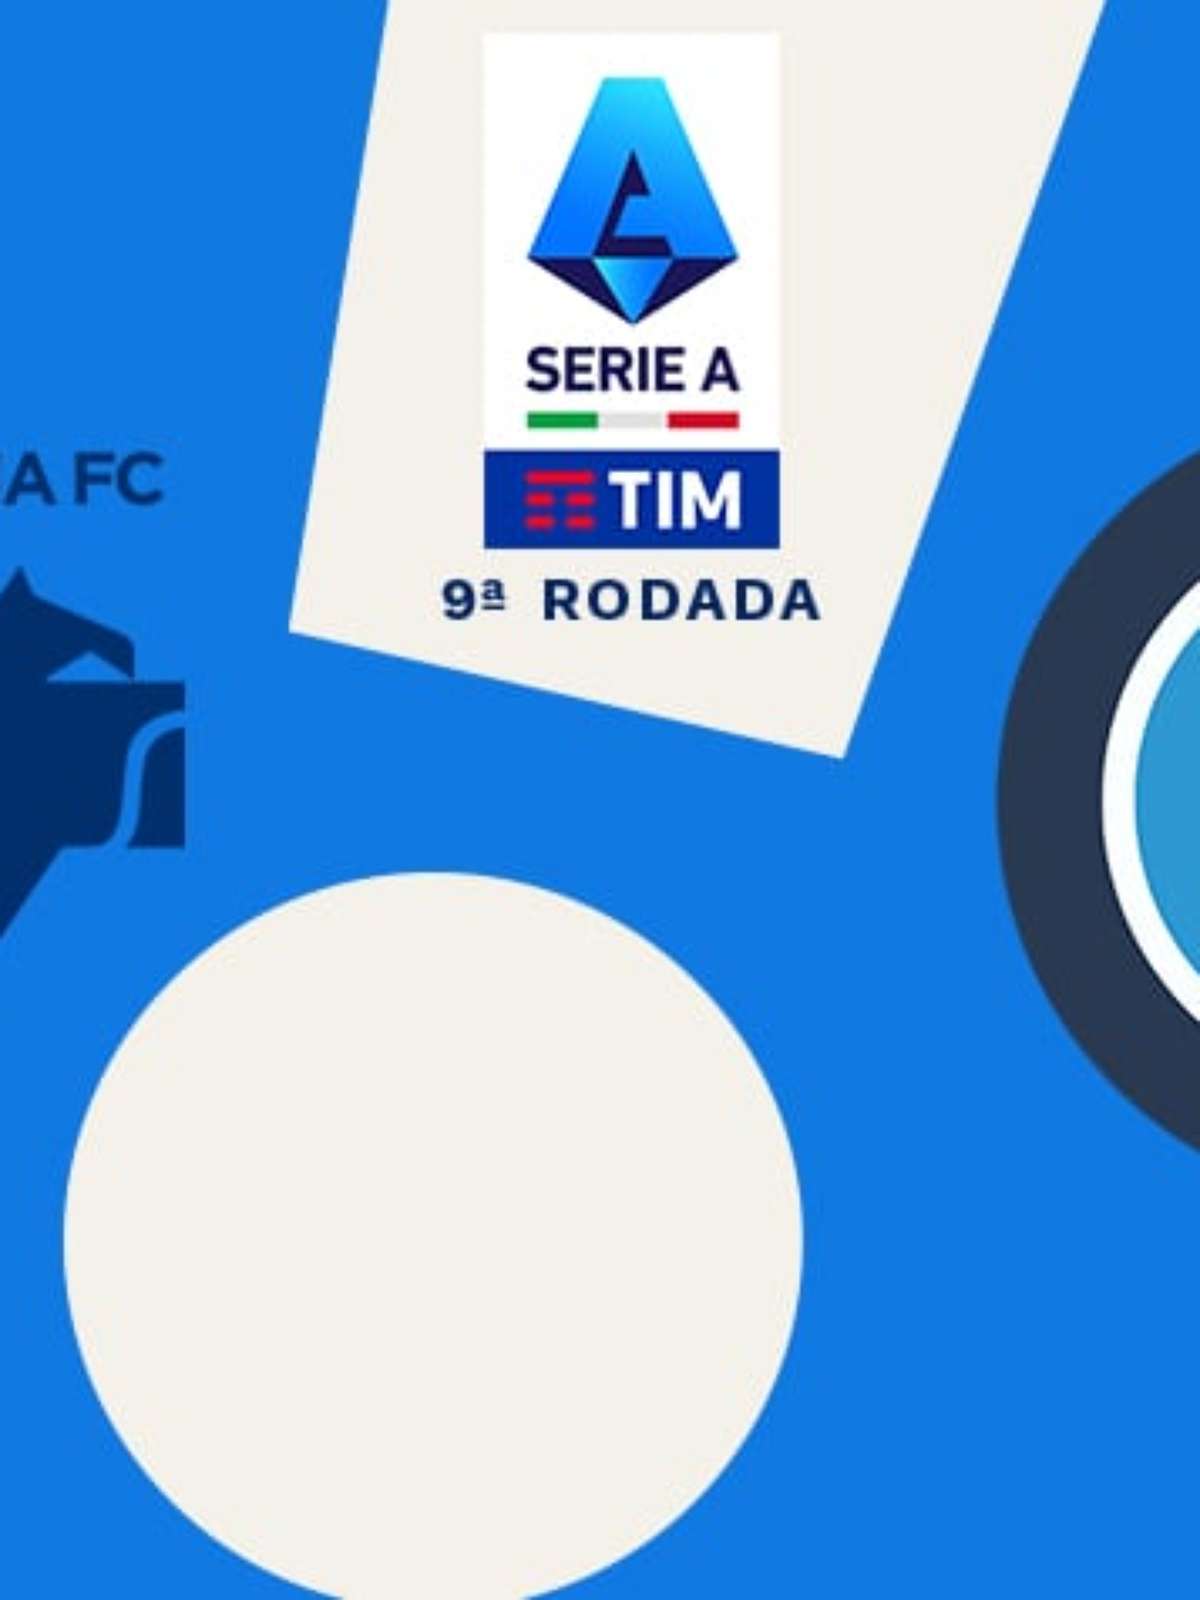 Verona x Napoli ao vivo: como assistir ao jogo online e onde vai